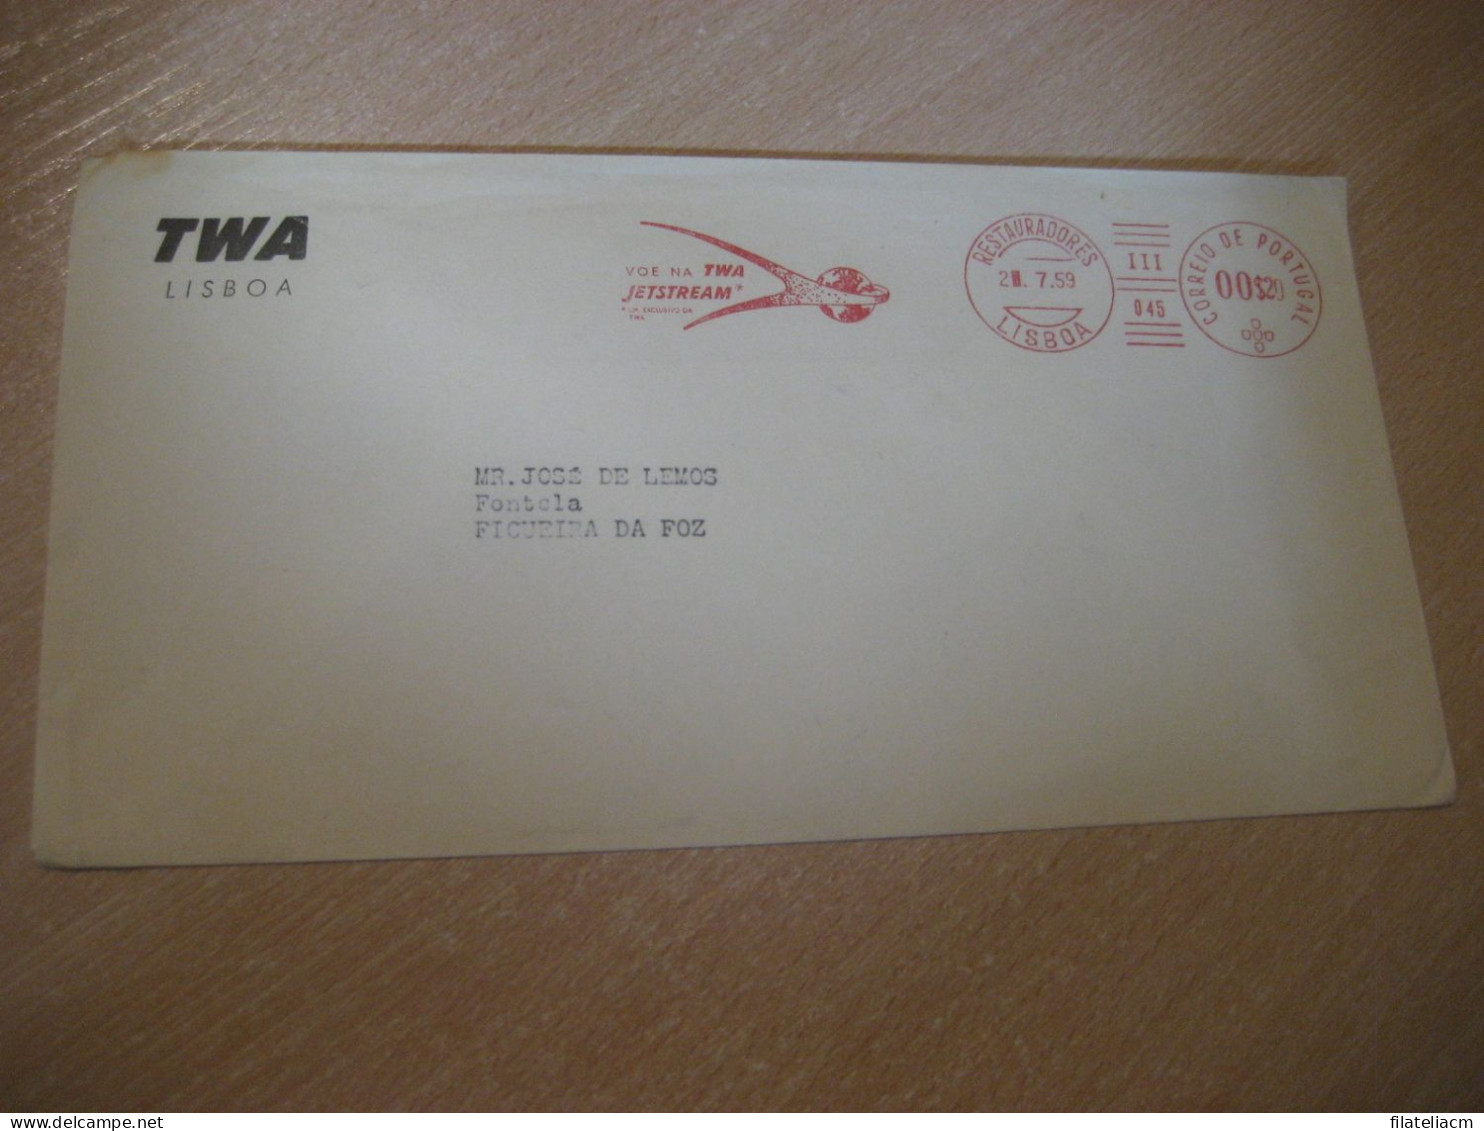 LISBOA 1959 To Figueira Da Foz TWA Jetstream Airline Trans World Airlines Flight Meter Mail Cancel Cover PORTUGAL - Cartas & Documentos